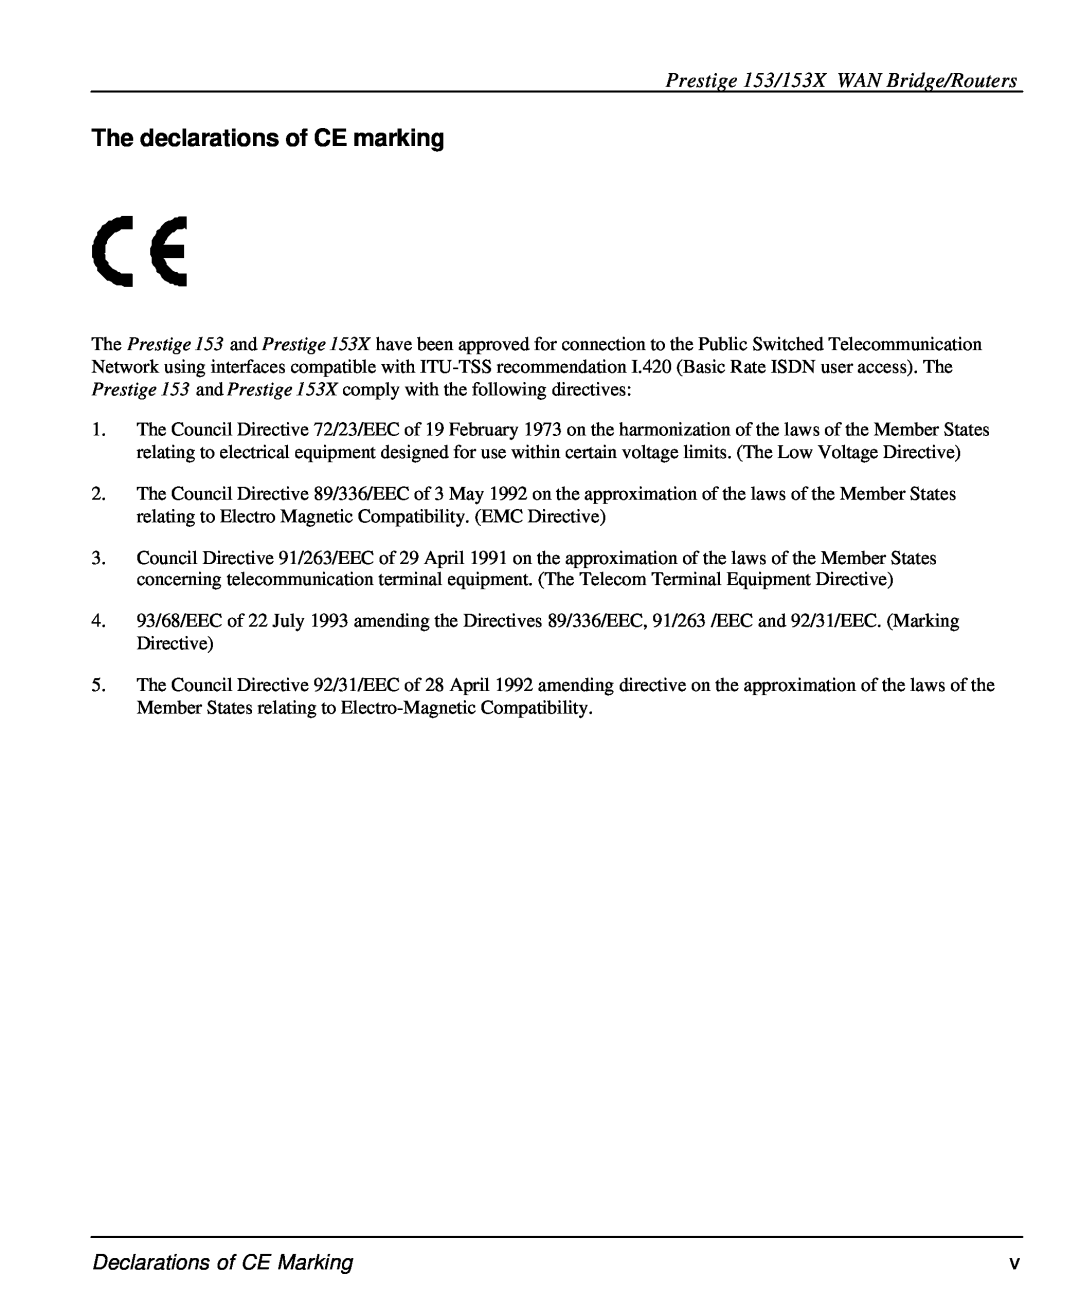 ZyXEL Communications The declarations of CE marking, Prestige 153/153X WAN Bridge/Routers, Declarations of CE Marking 